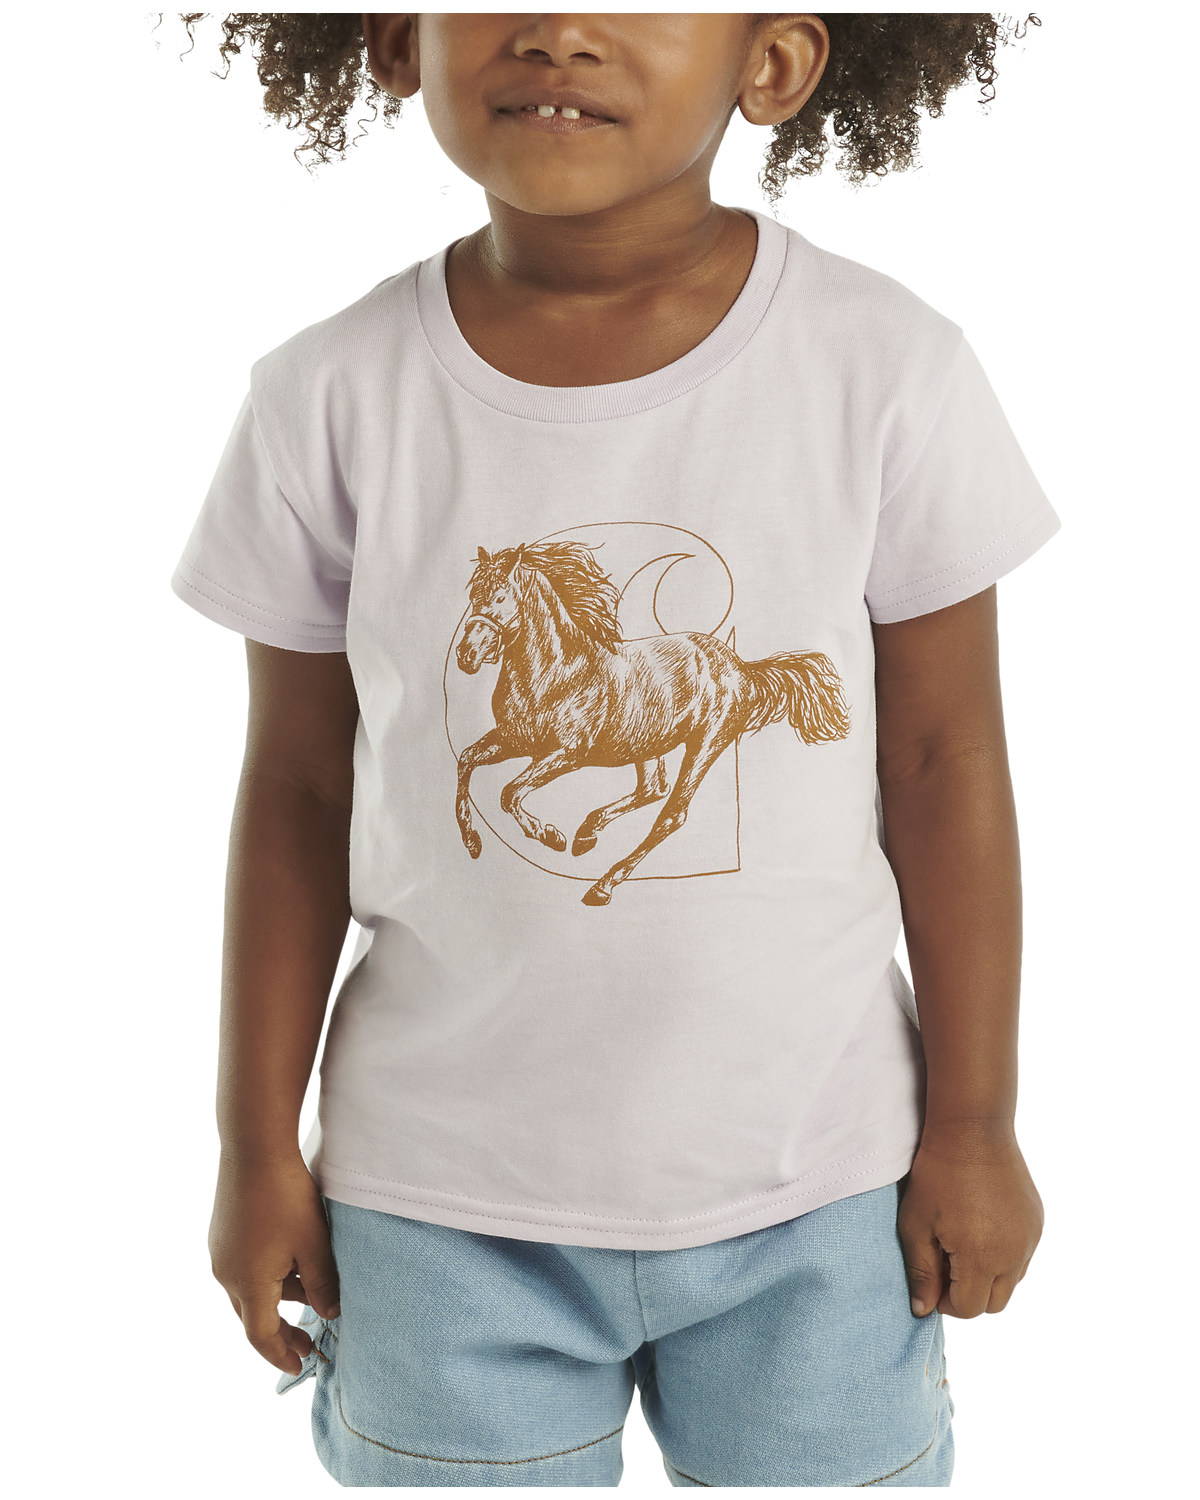 Carhartt Toddler Girls' Horse Short Sleeve Graphic Tee